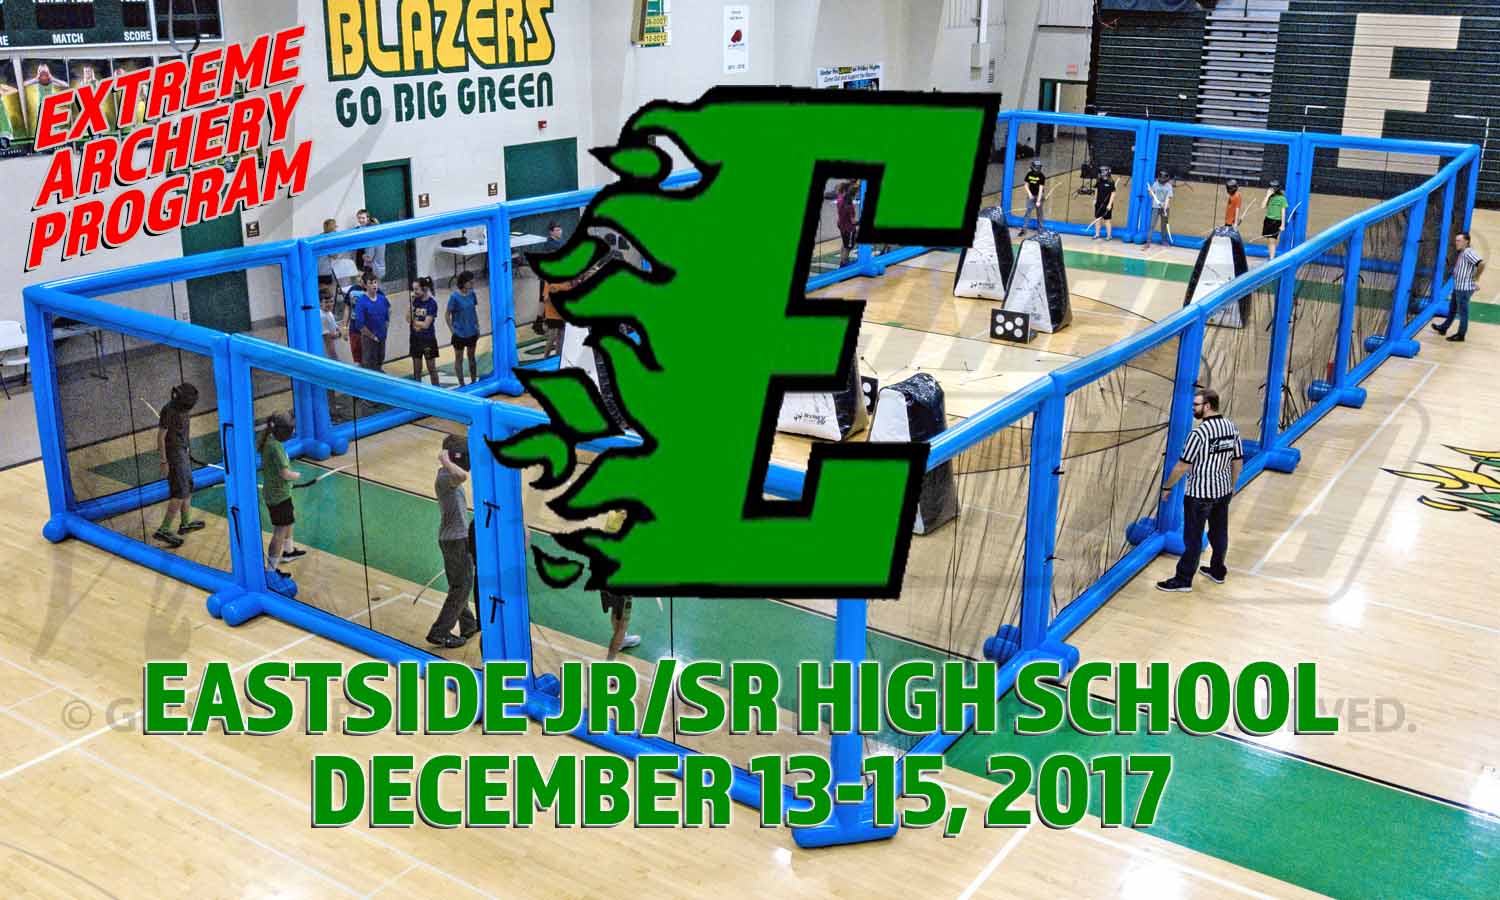 Eastside JR/SR High School Extreme Archery Program